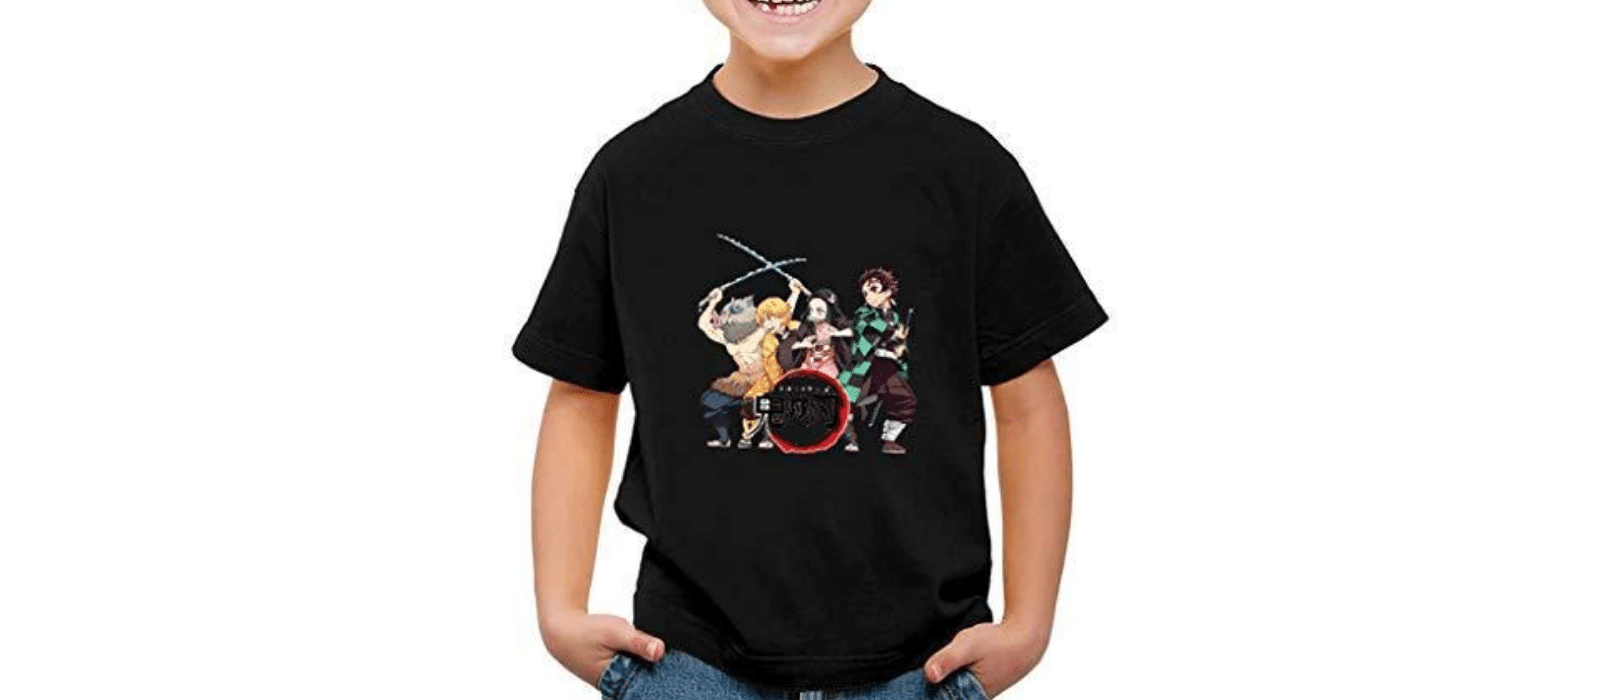 anime shirts for him